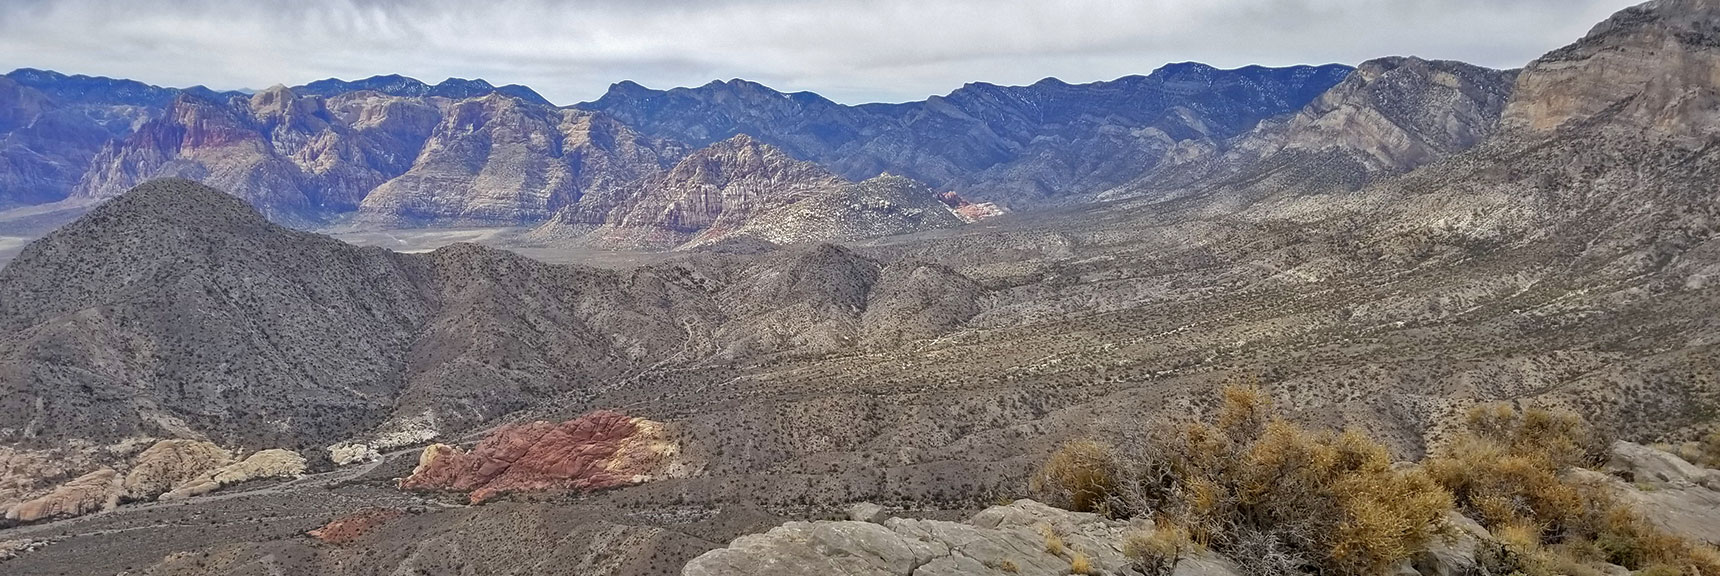 Damsel Peak Summit in Calico Basin, Nevada 007